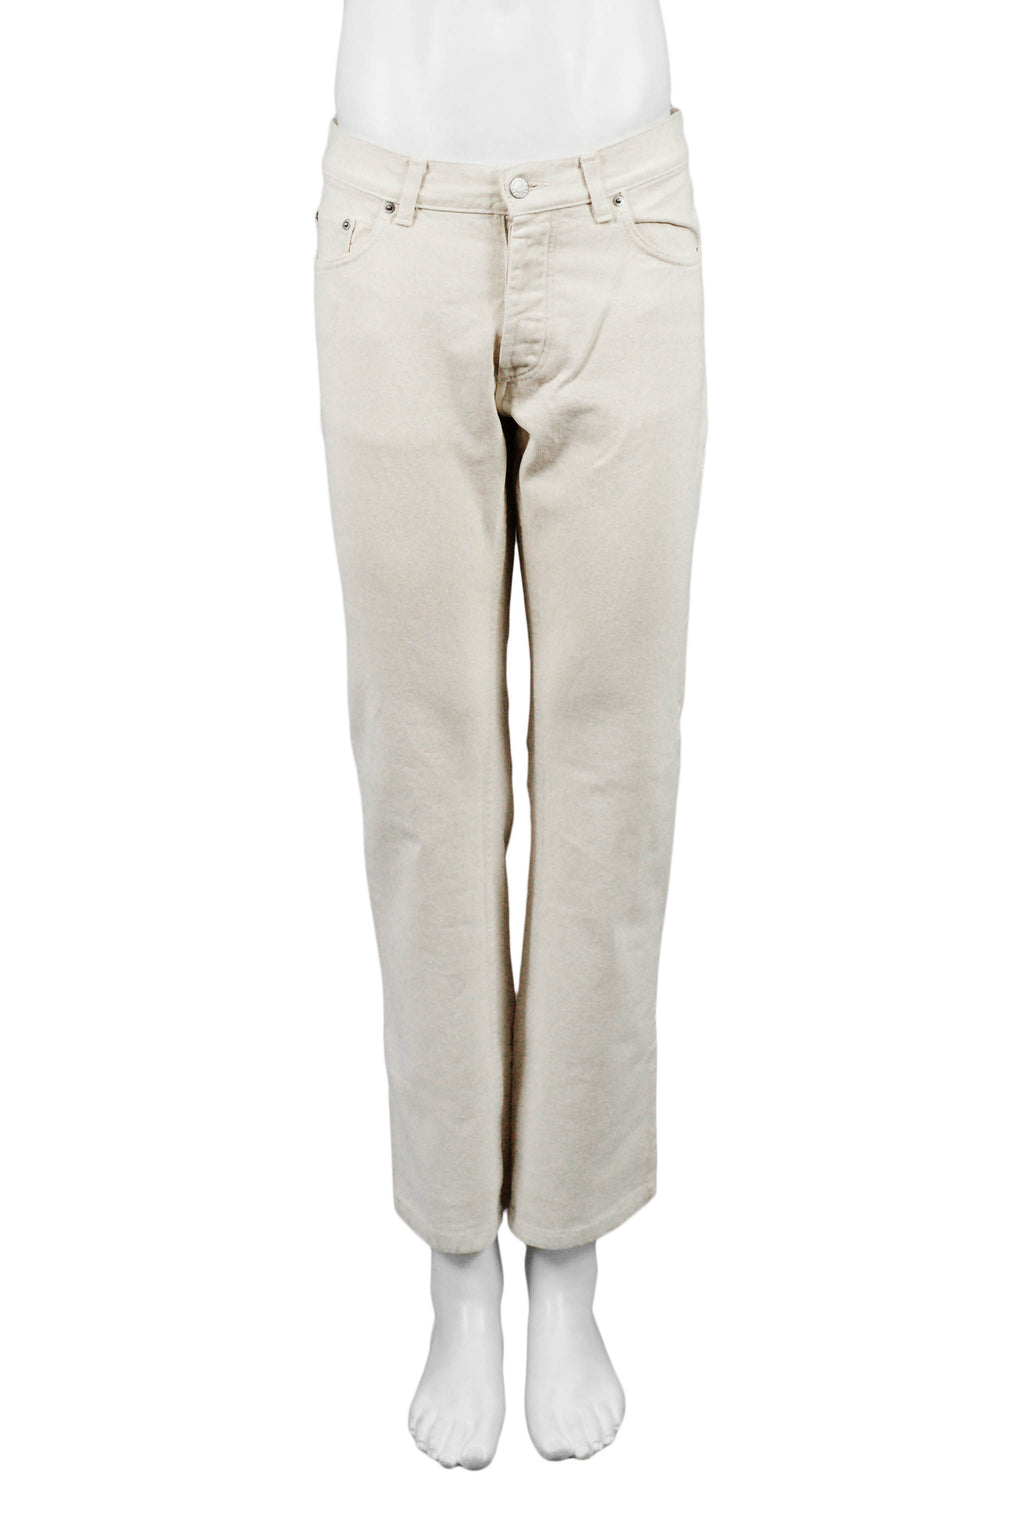 white denim pants